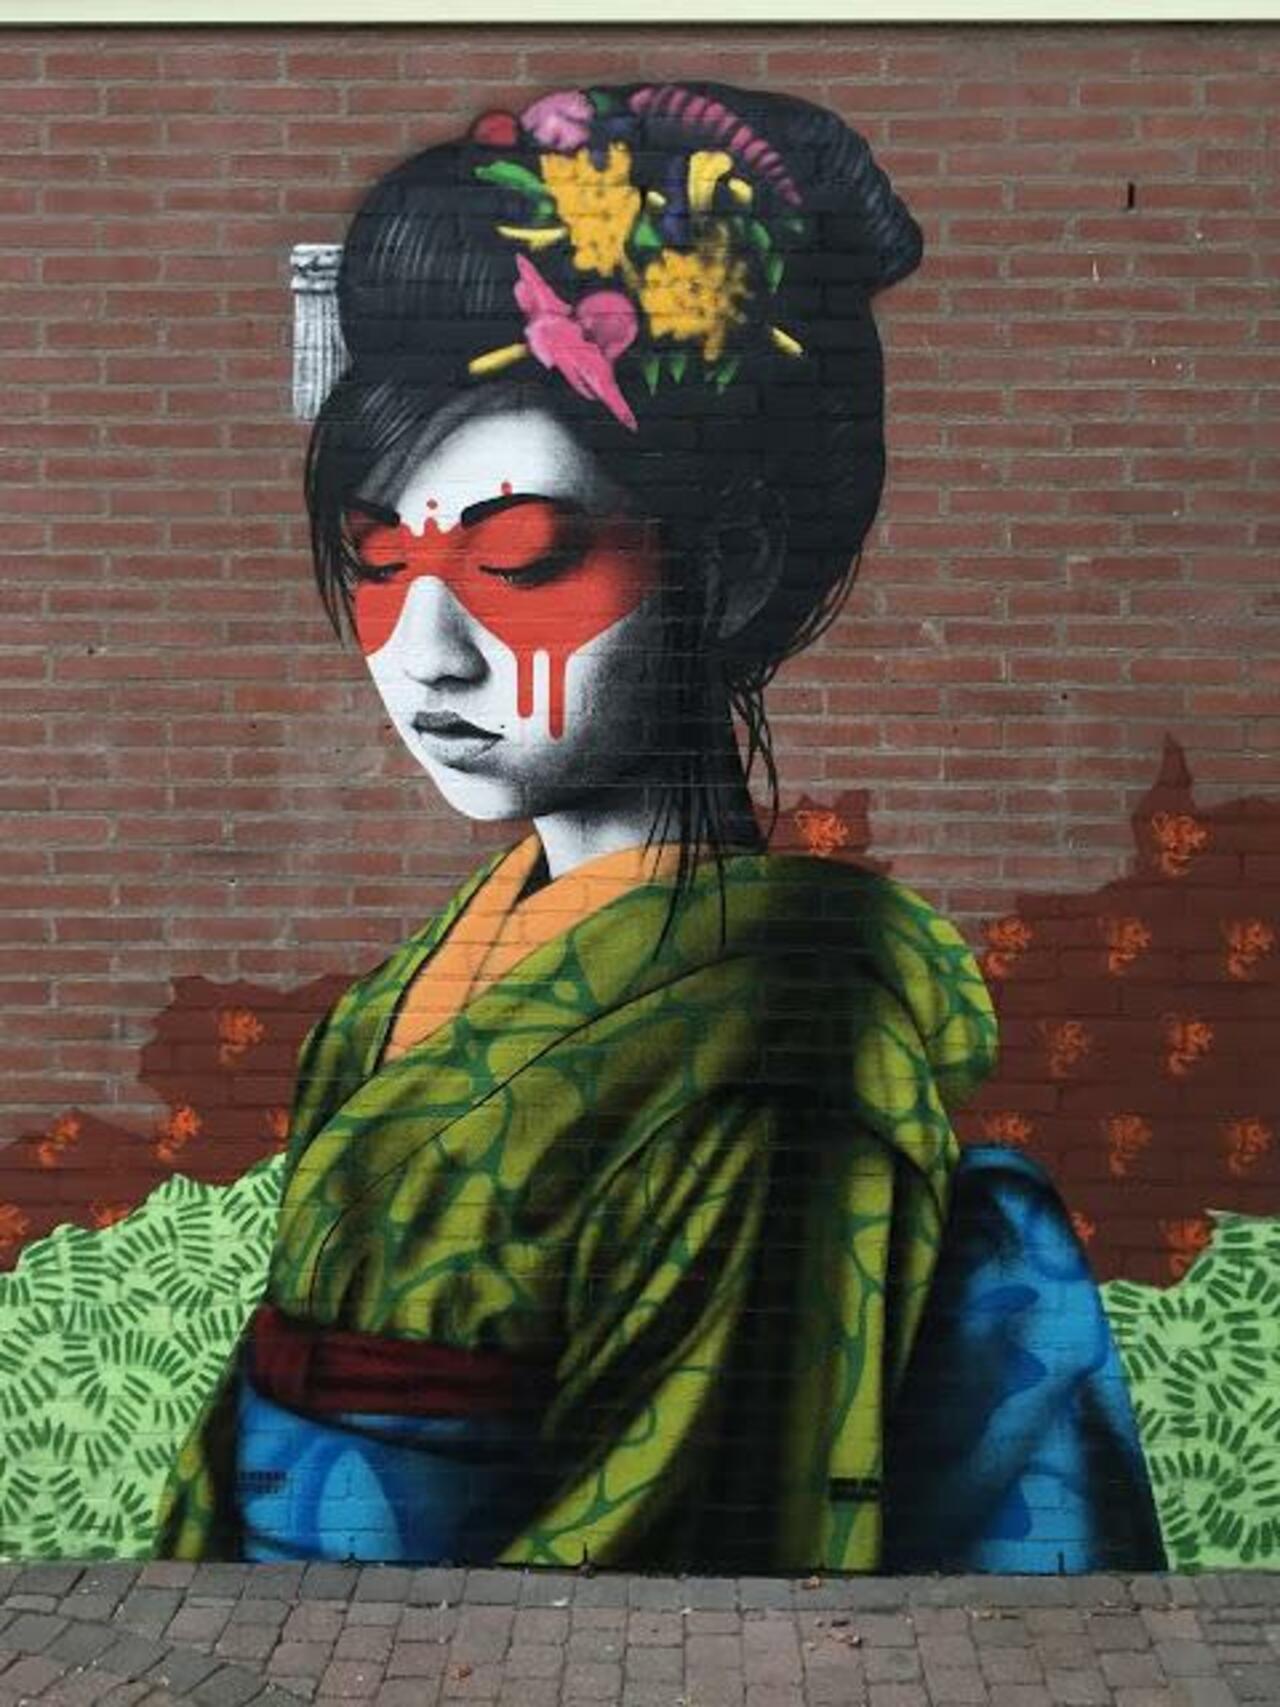 RT @alastresenpunto: "Oralali", a new mural by Fin DAC in Breda, Netherlands http://bit.ly/1JUcM9O vía @streetartnews #graffiti http://t.co/MtiNqHXEiW